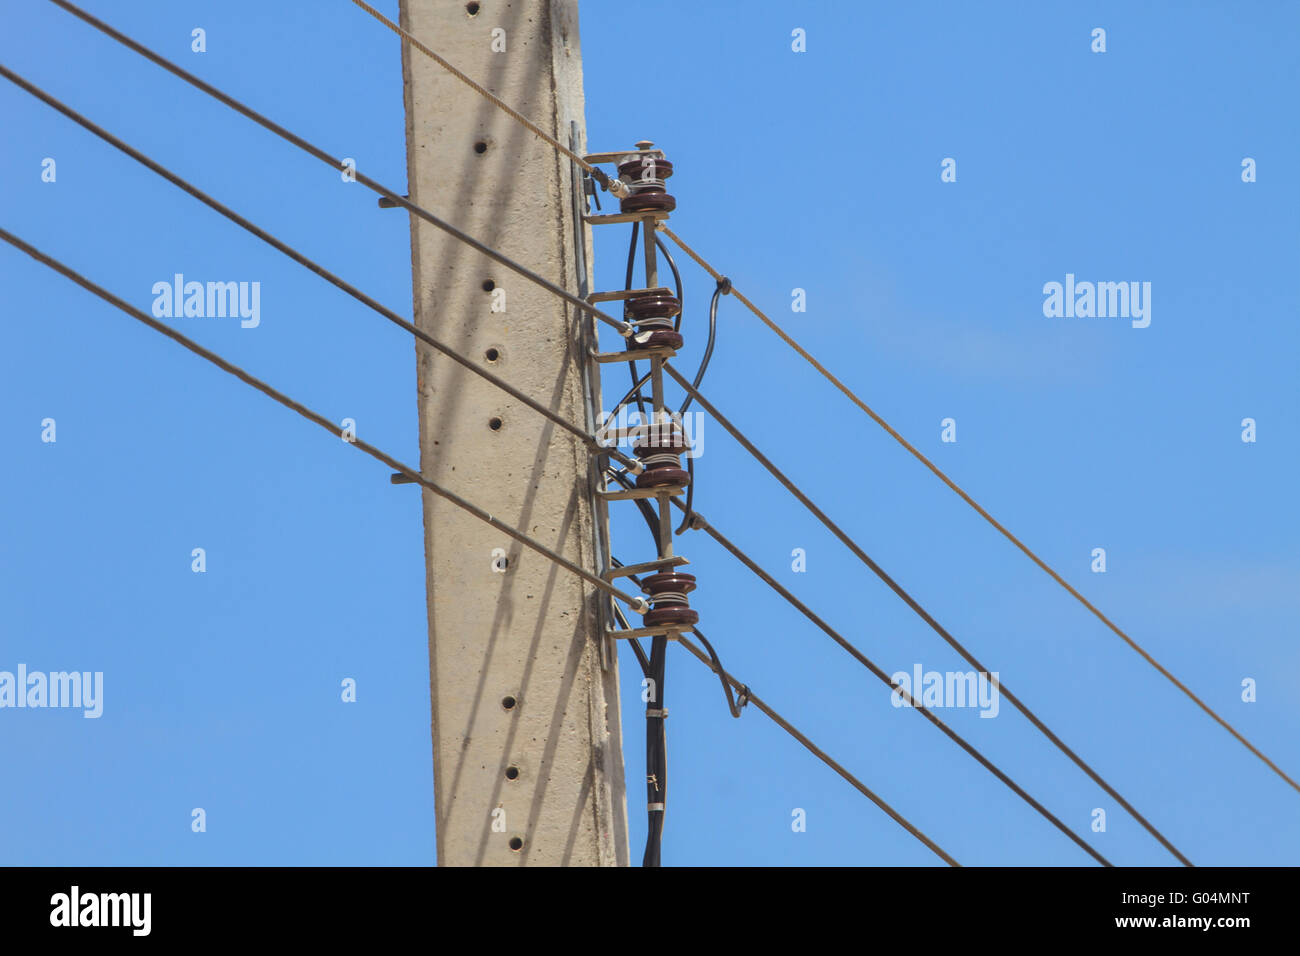 electricity pole on blue sky background in a village Stock Photo